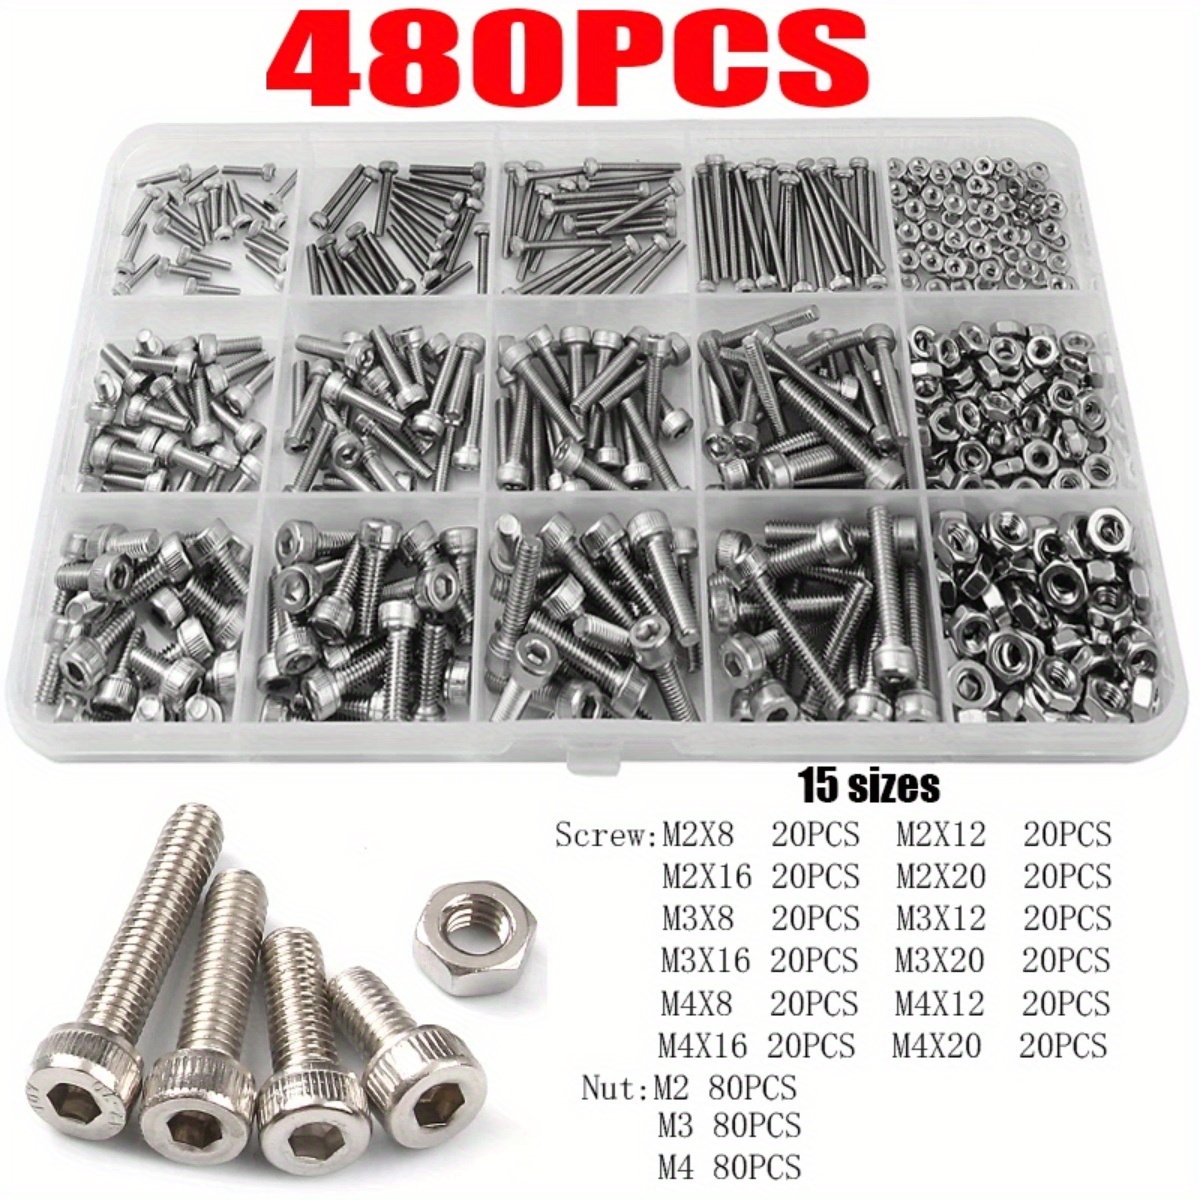 

480pcs Screws Set M2 M3 M4 304 Stainless Steel Allen Bolt Hex Hexagon Socket Head Cap Screws Nut Assortment Kit